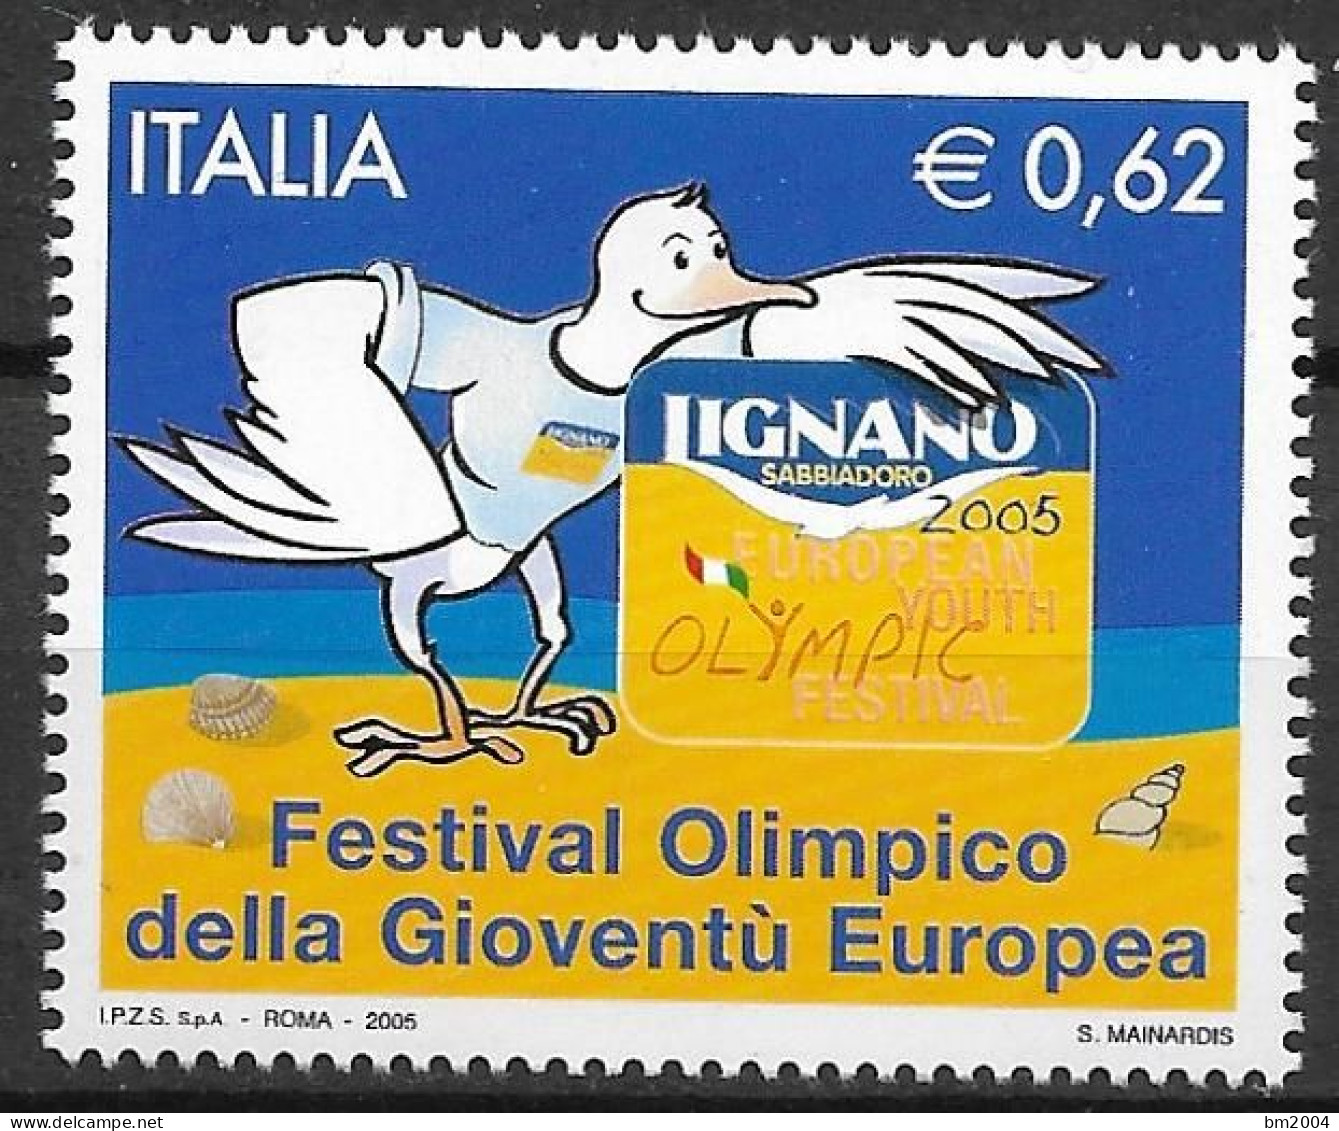 2005  Italien  Mi. 3045**MNH  . 8. Europäisches Olympisches Jugendfestival (EYOF), Lignano. - 2001-10: Mint/hinged